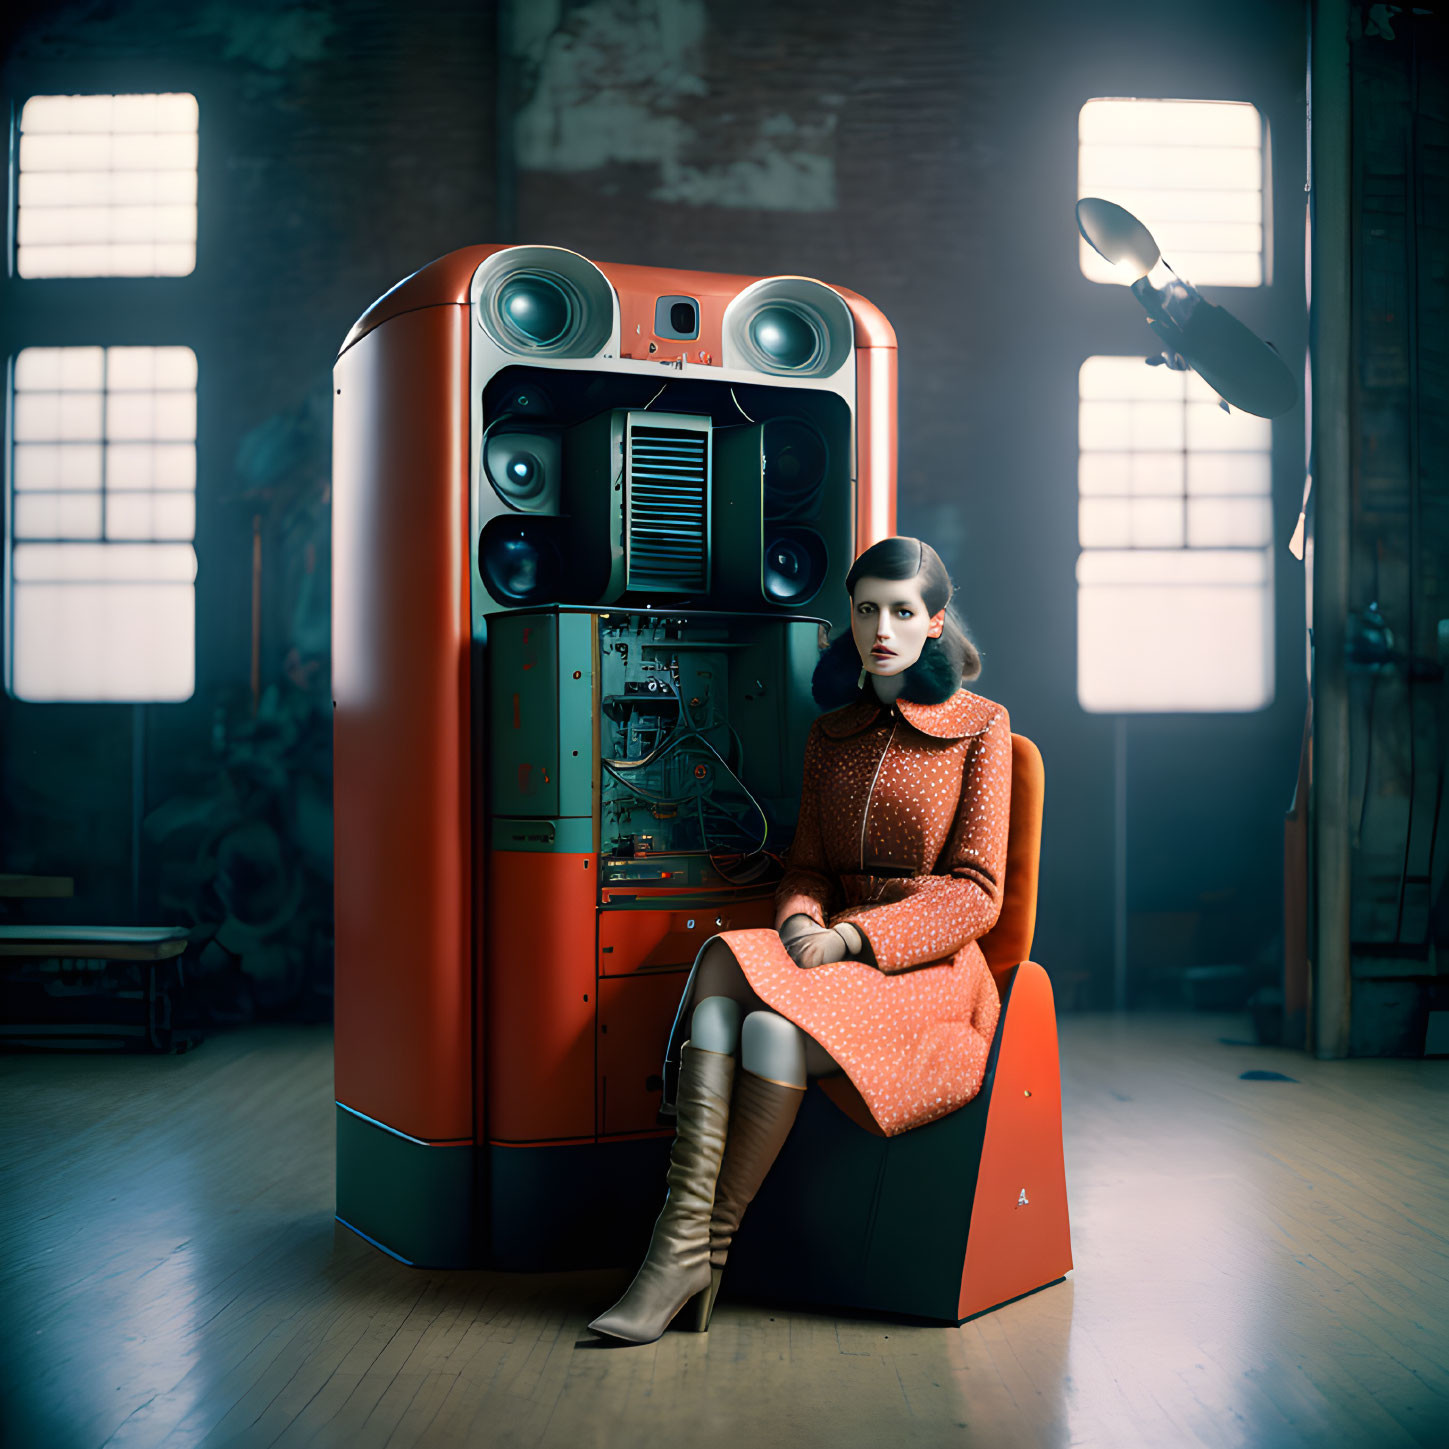 Vintage orange dress woman next to retro-futuristic jukebox in dimly lit room